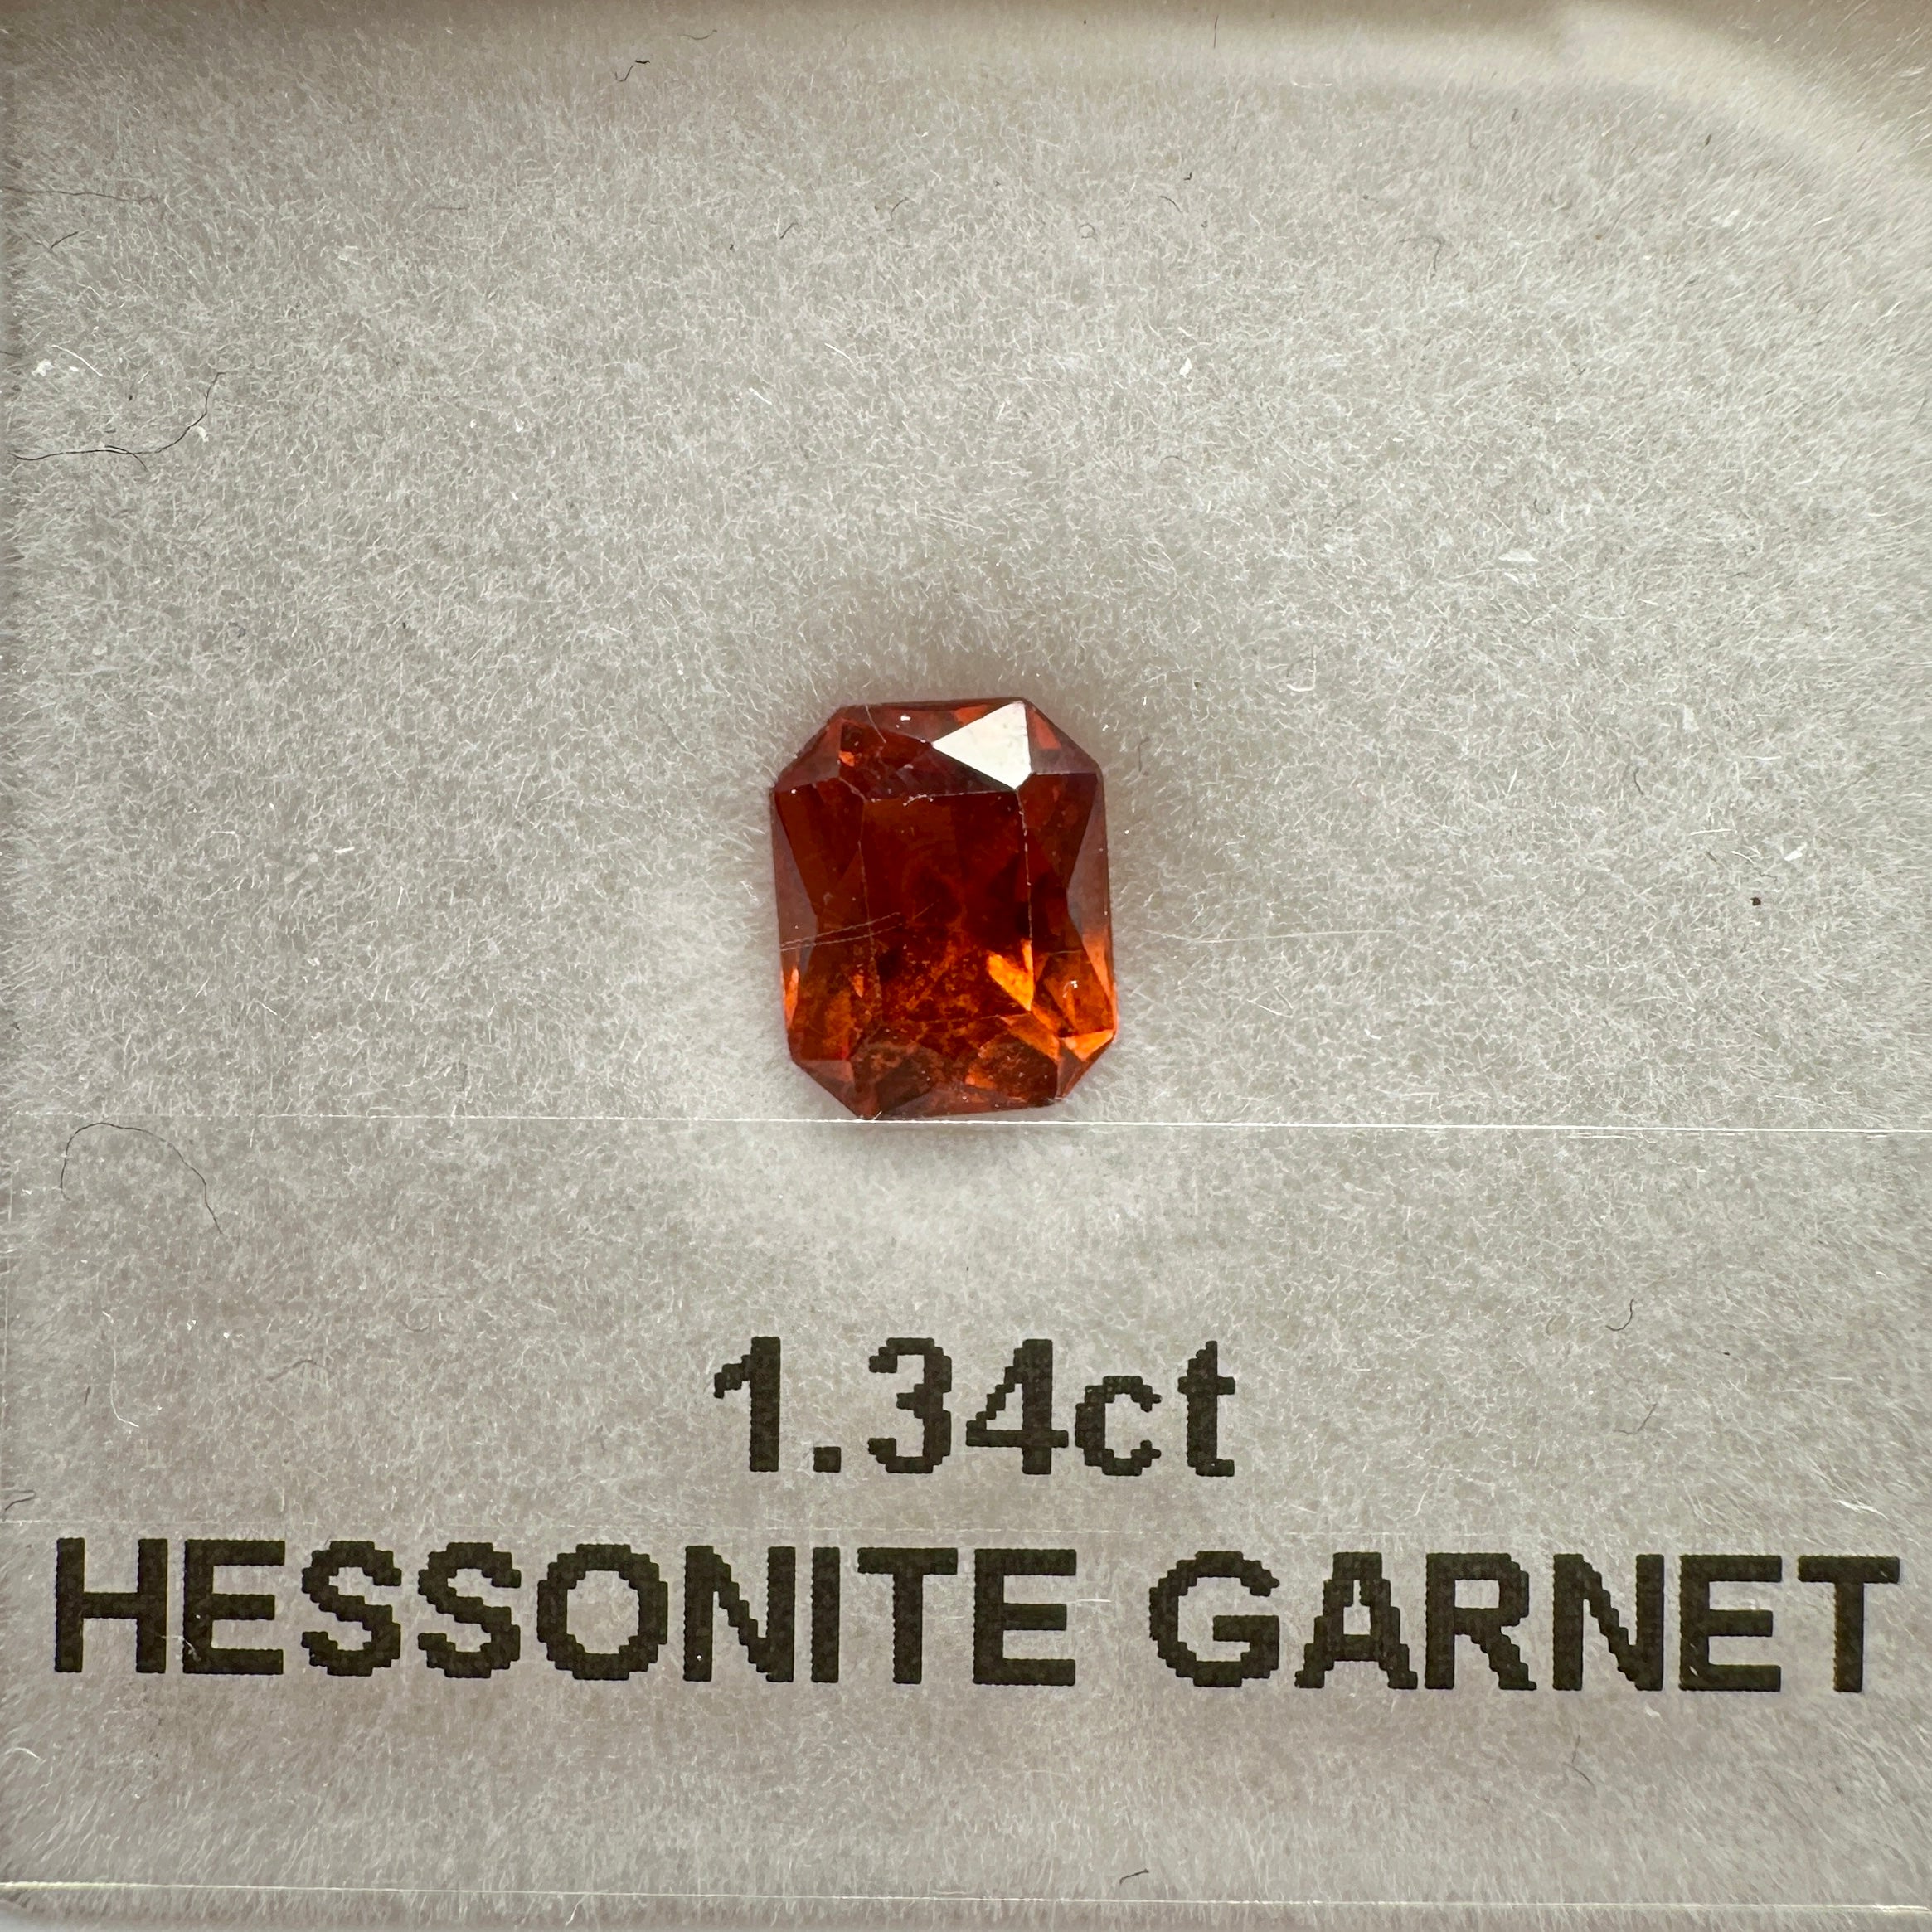 1.34ct Hessonite Garnet, Untreated Unheated, native cut